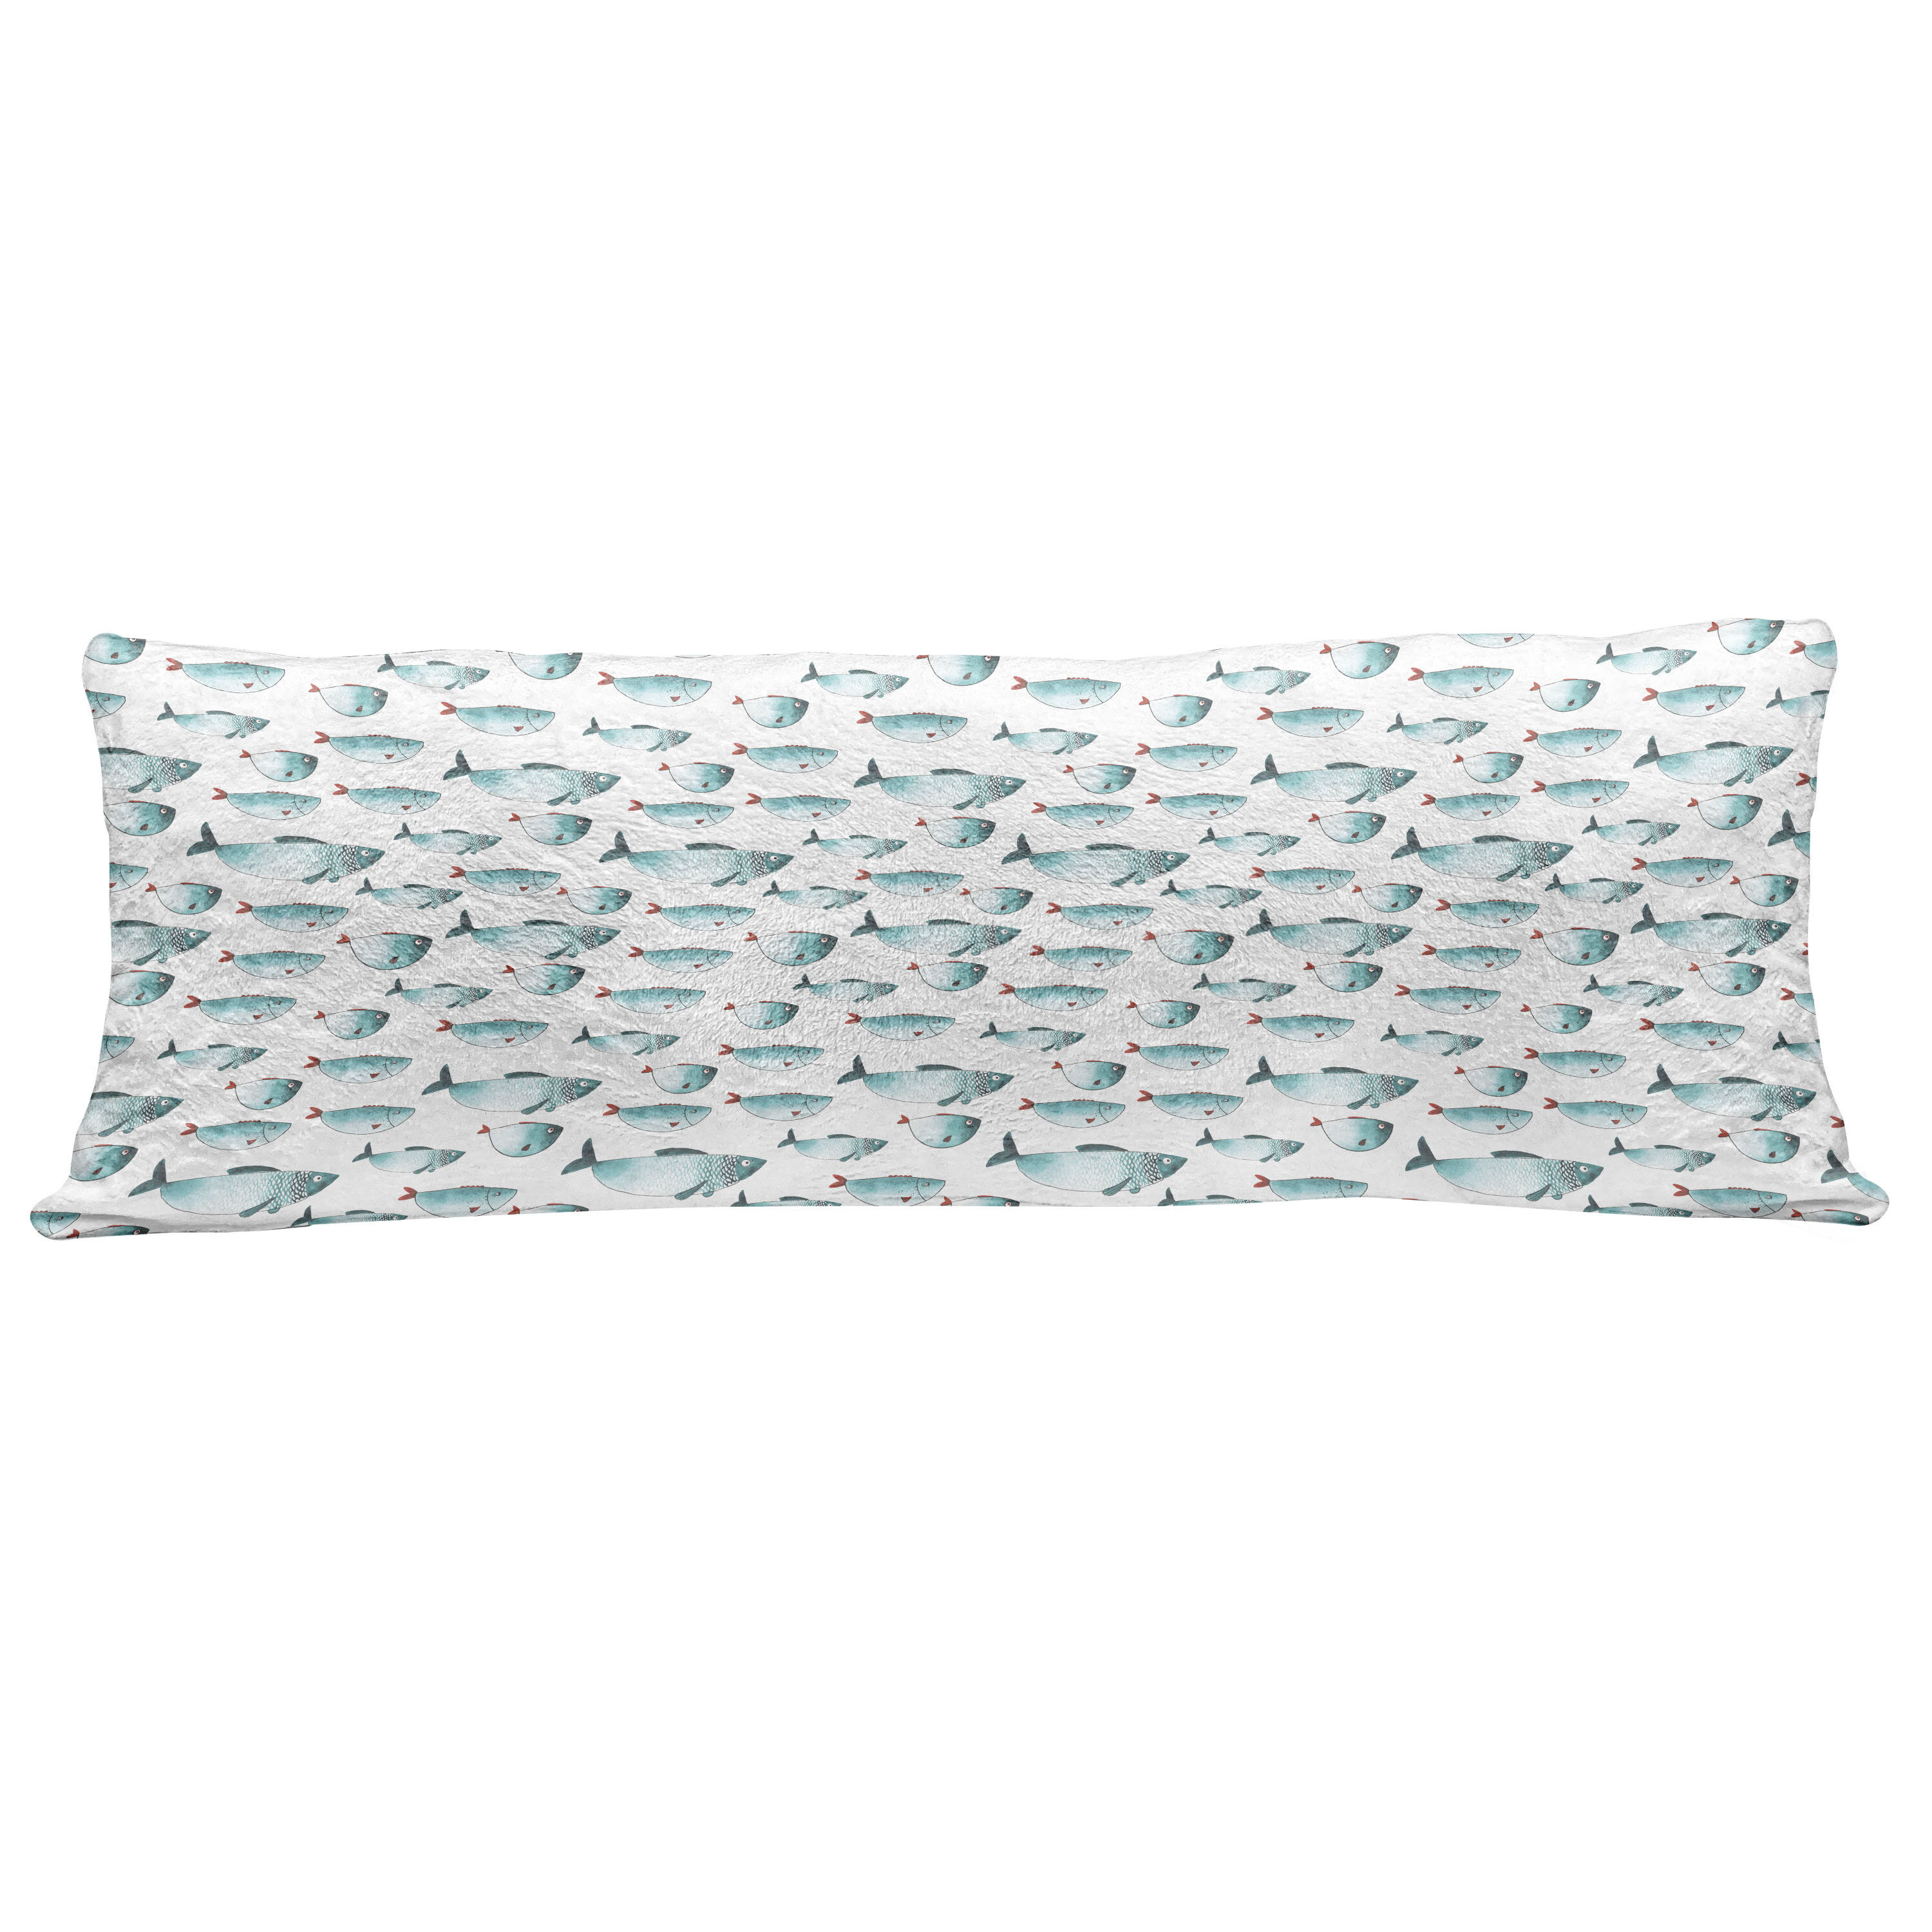 Marine Fish Pillow Sham Decorative Pillowcase 3 Sizes Bedroom Decor Ambesonne 